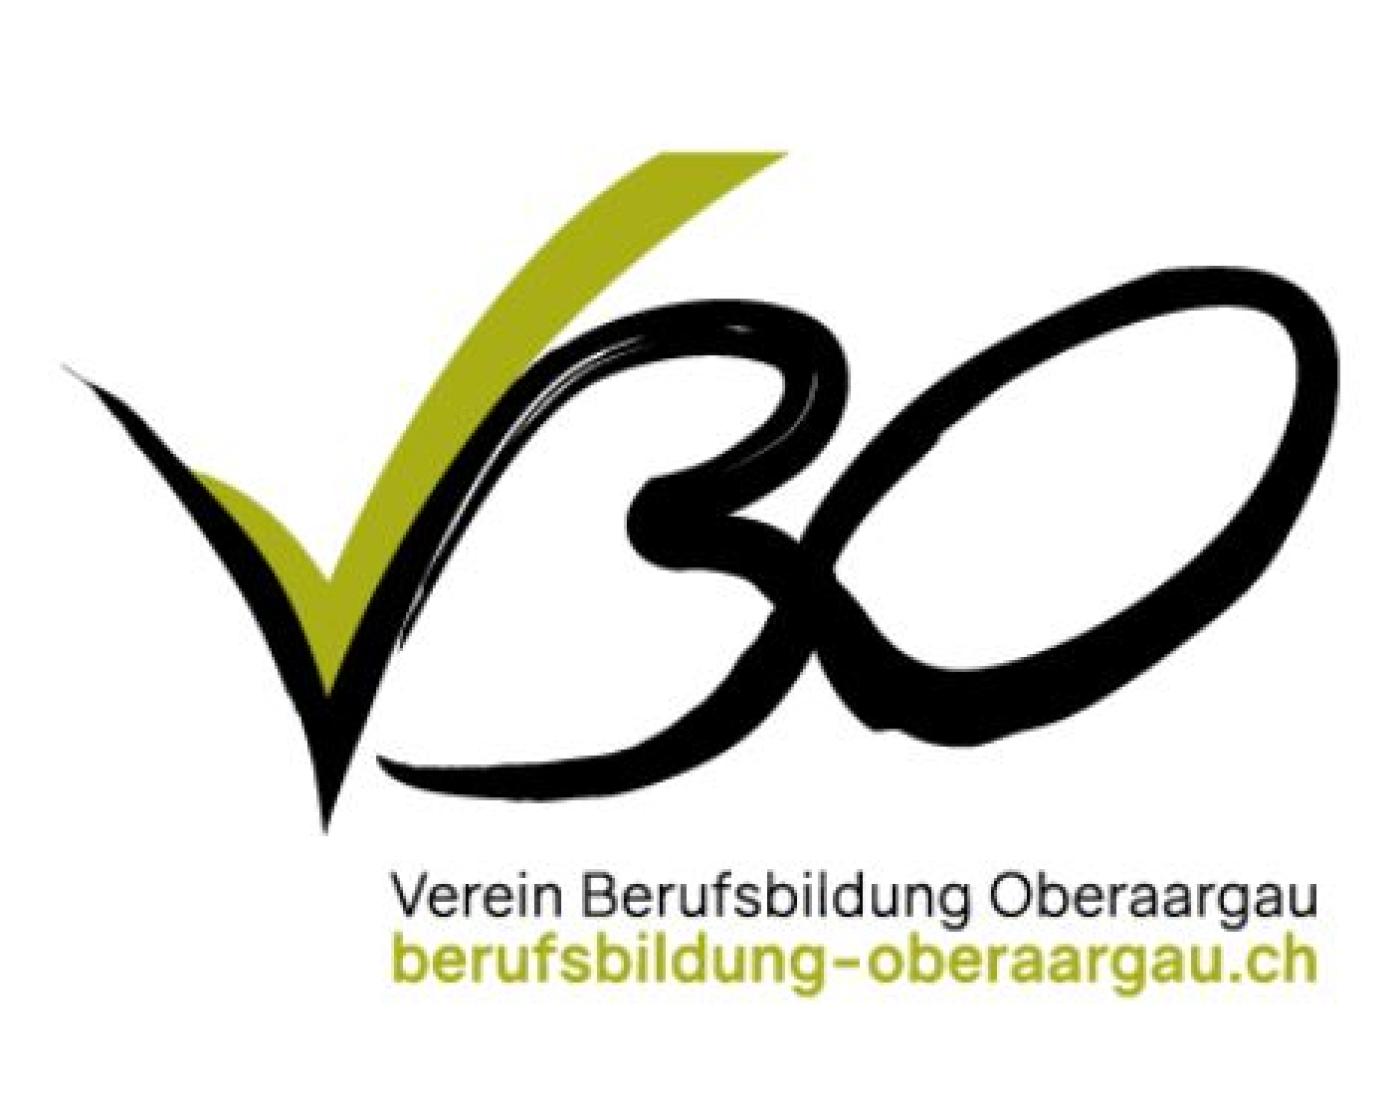 Verein Berufsbildung Oberaargau